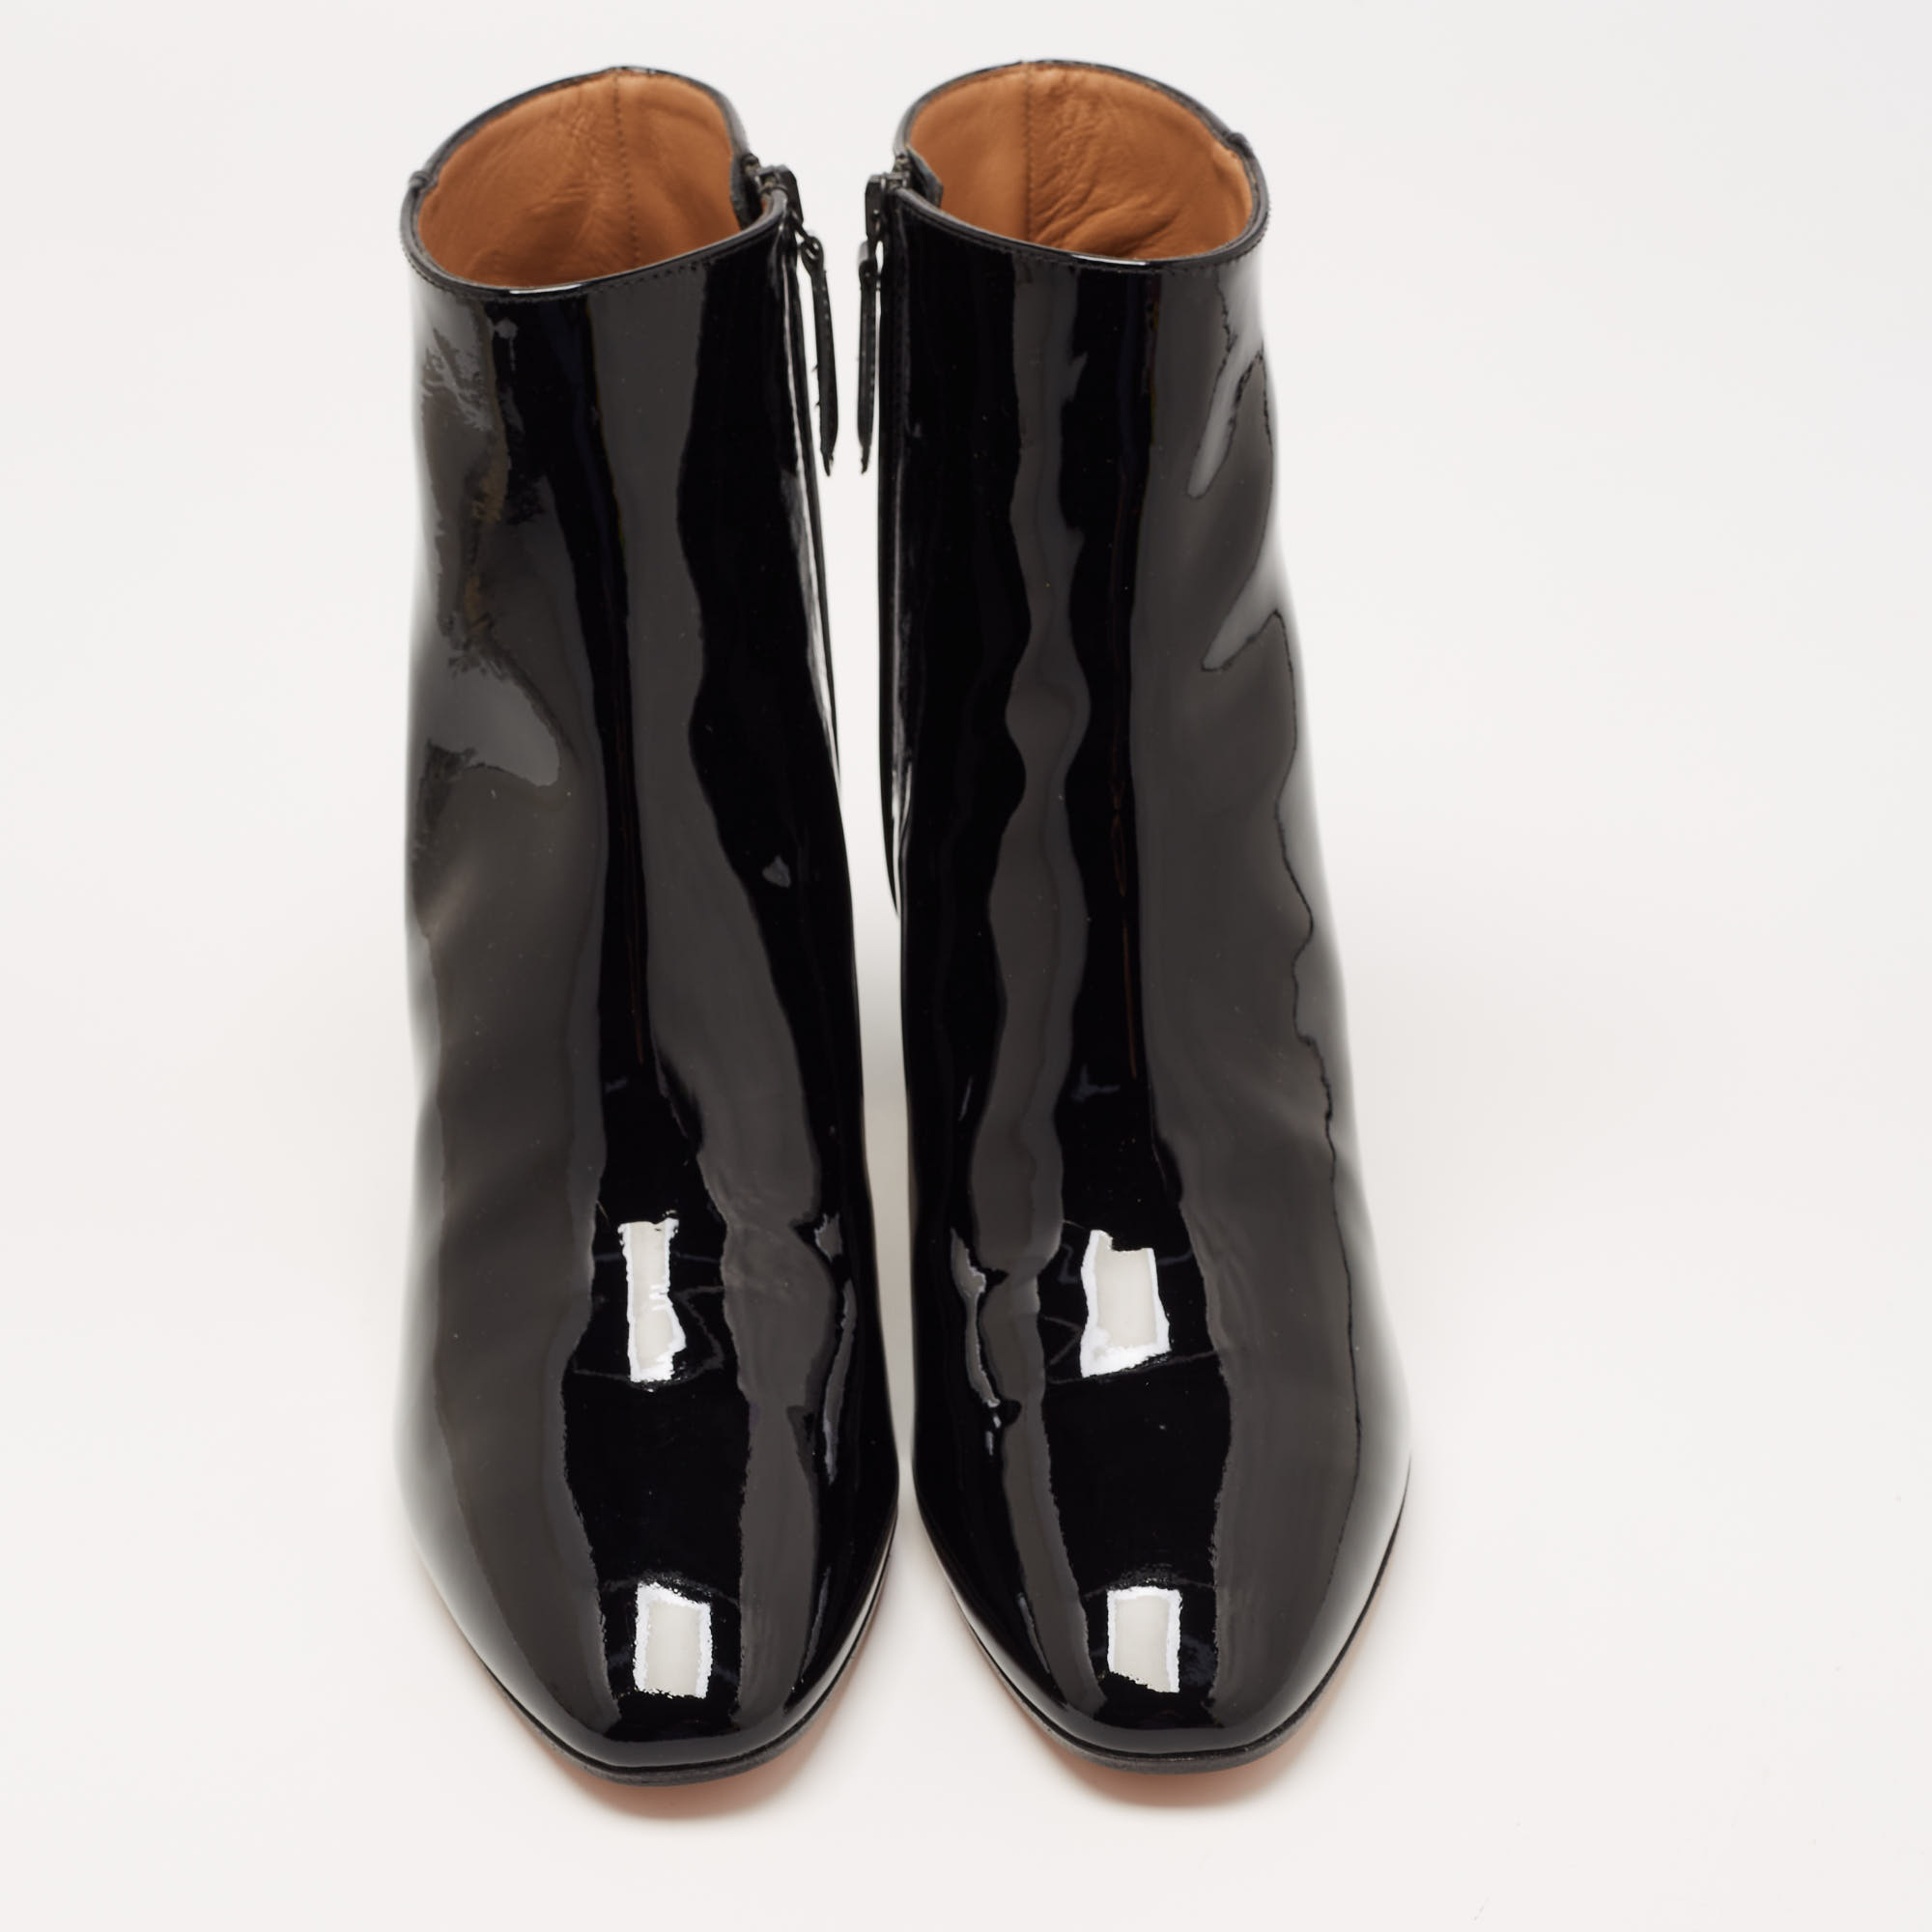 Aquazzura Black Patent Leather Grenelle Block Heel Ankle Booties Size 41